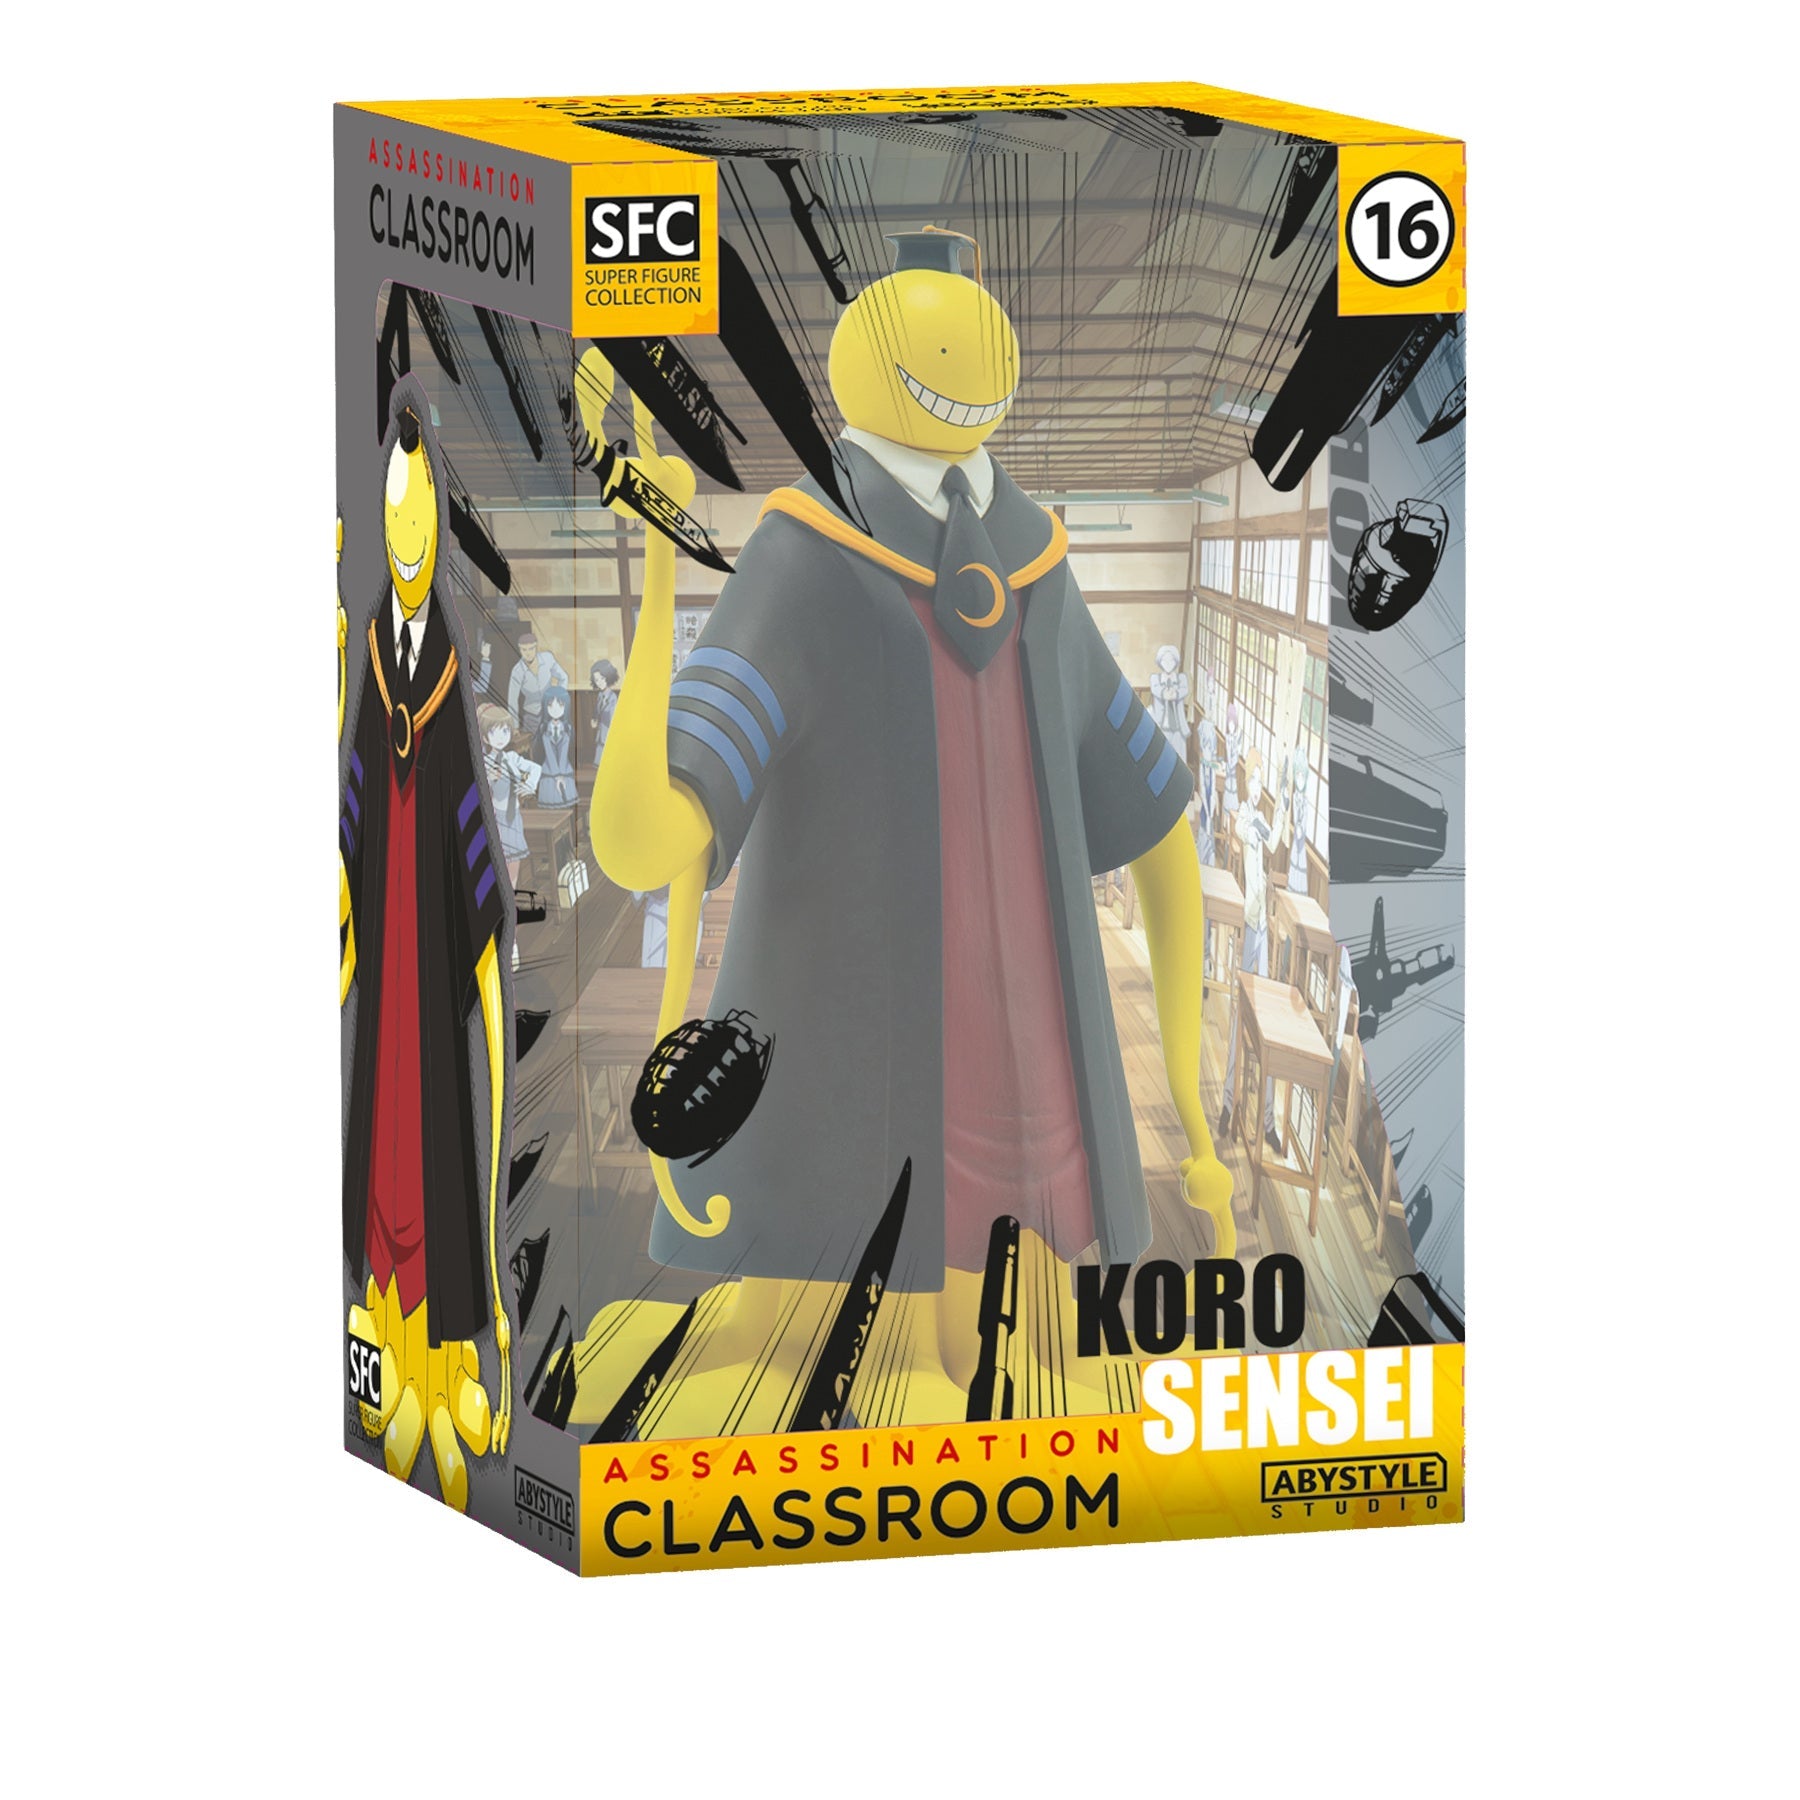 Assassination Classroom Koro Sensei SFC Figure - Abysse - 8